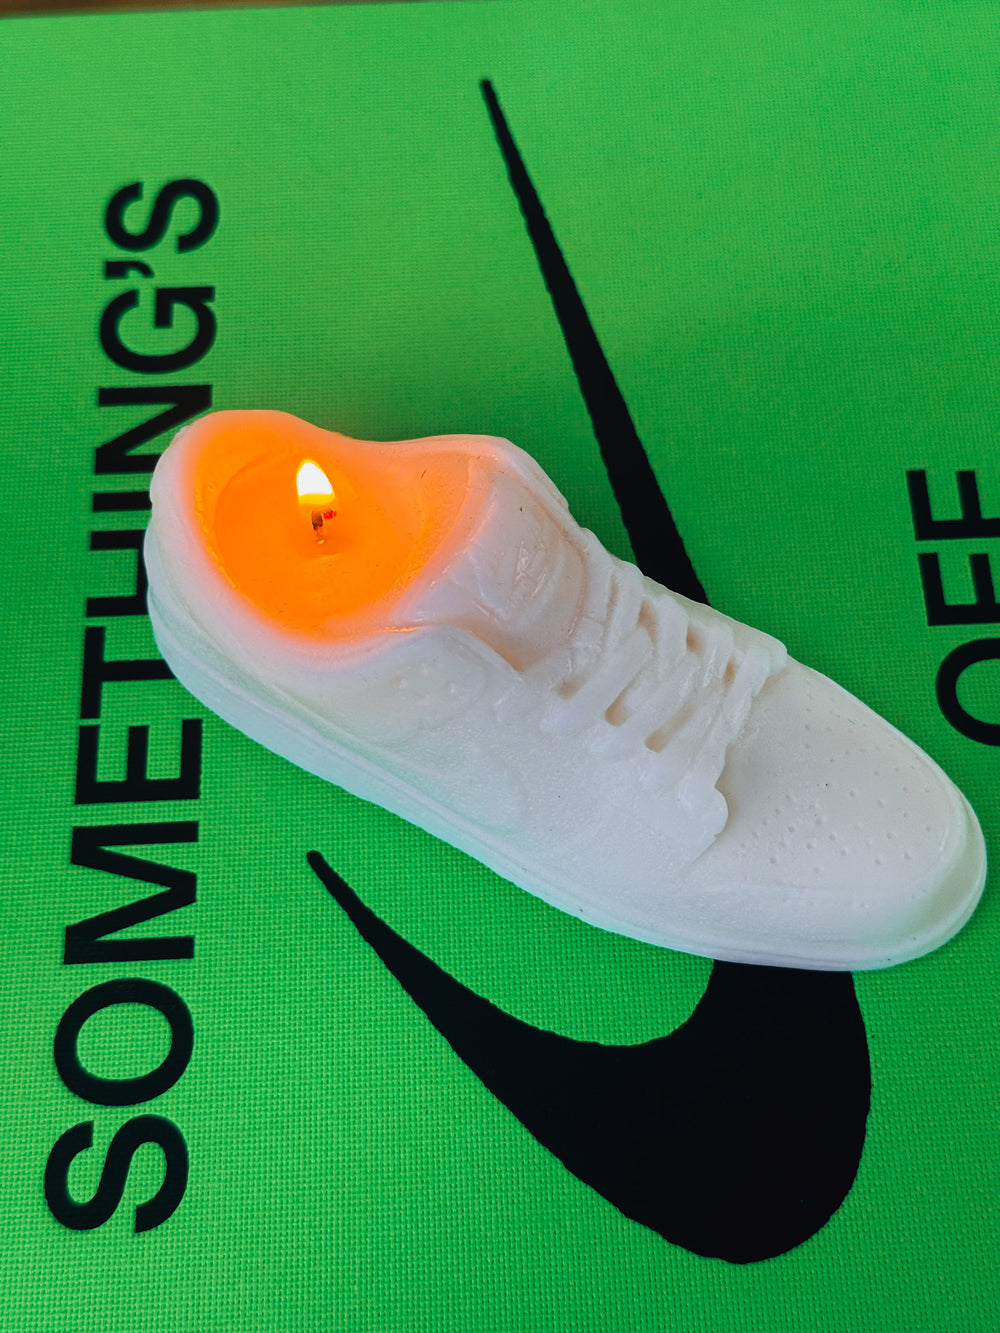 Makagi Sneaker Kerze nike Dunk weiß brennend auf grünem buch